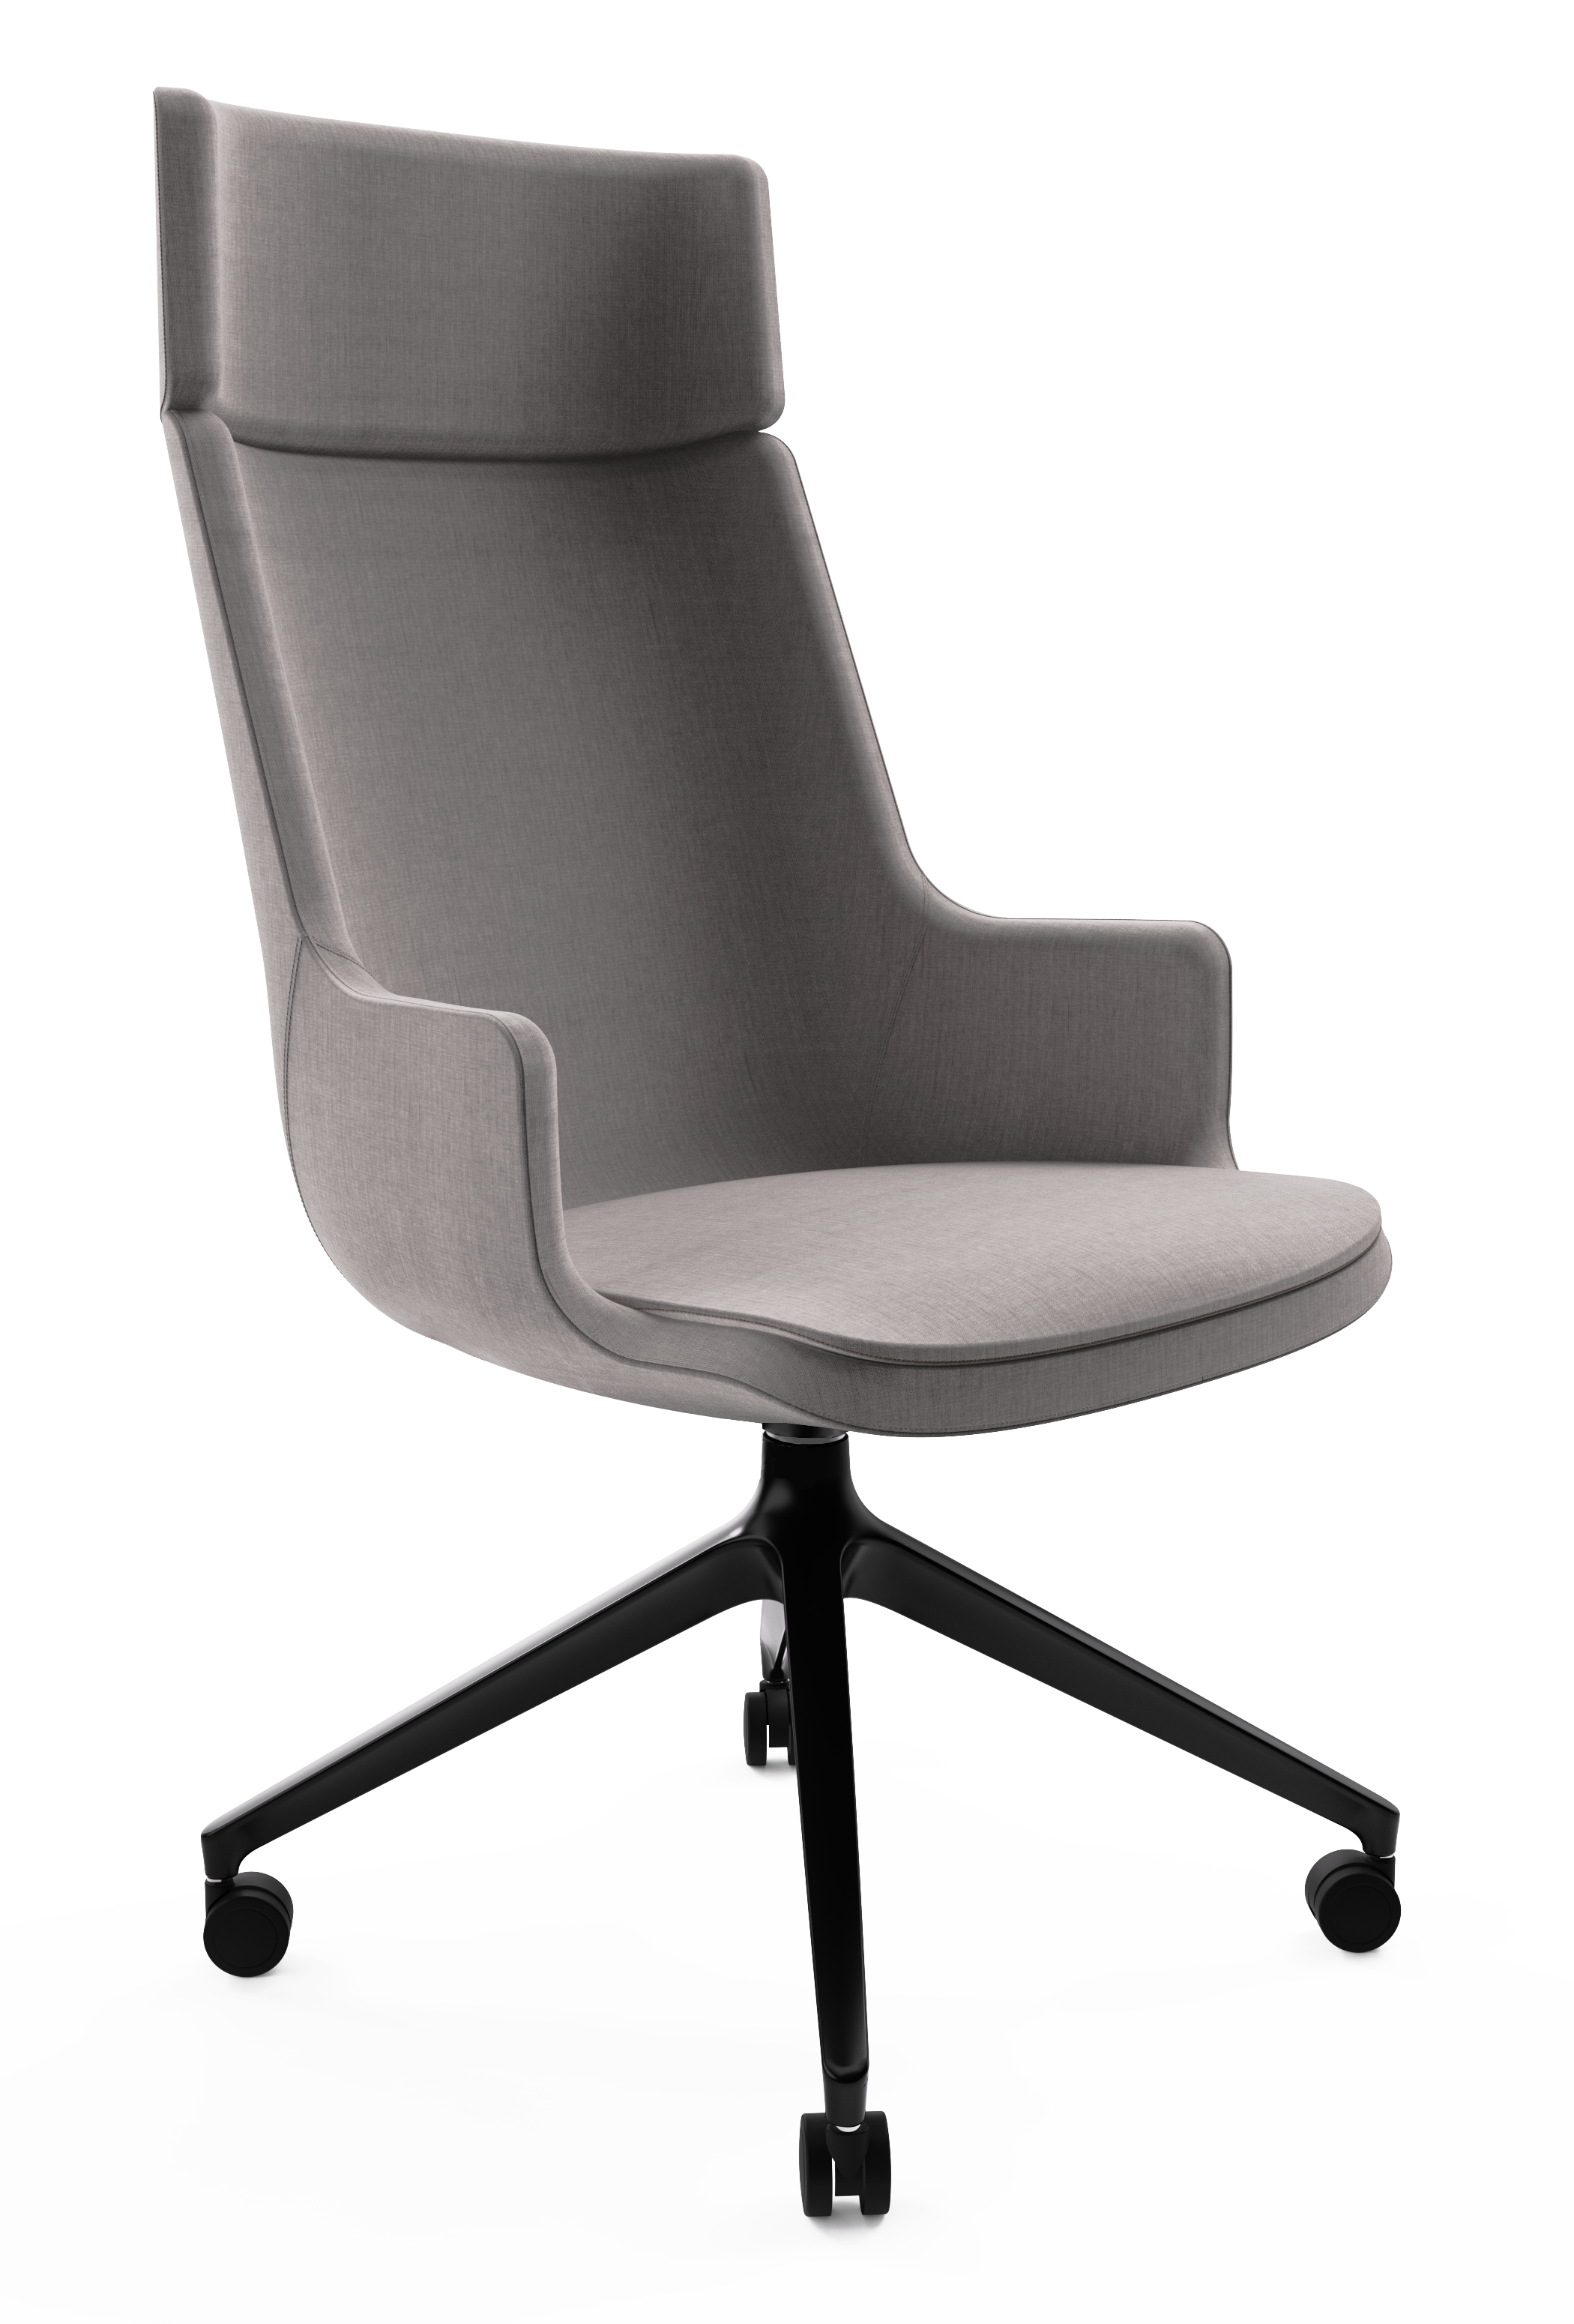 WS - Contour chair - High, 4 star pyramidal castor black base (Front angle)